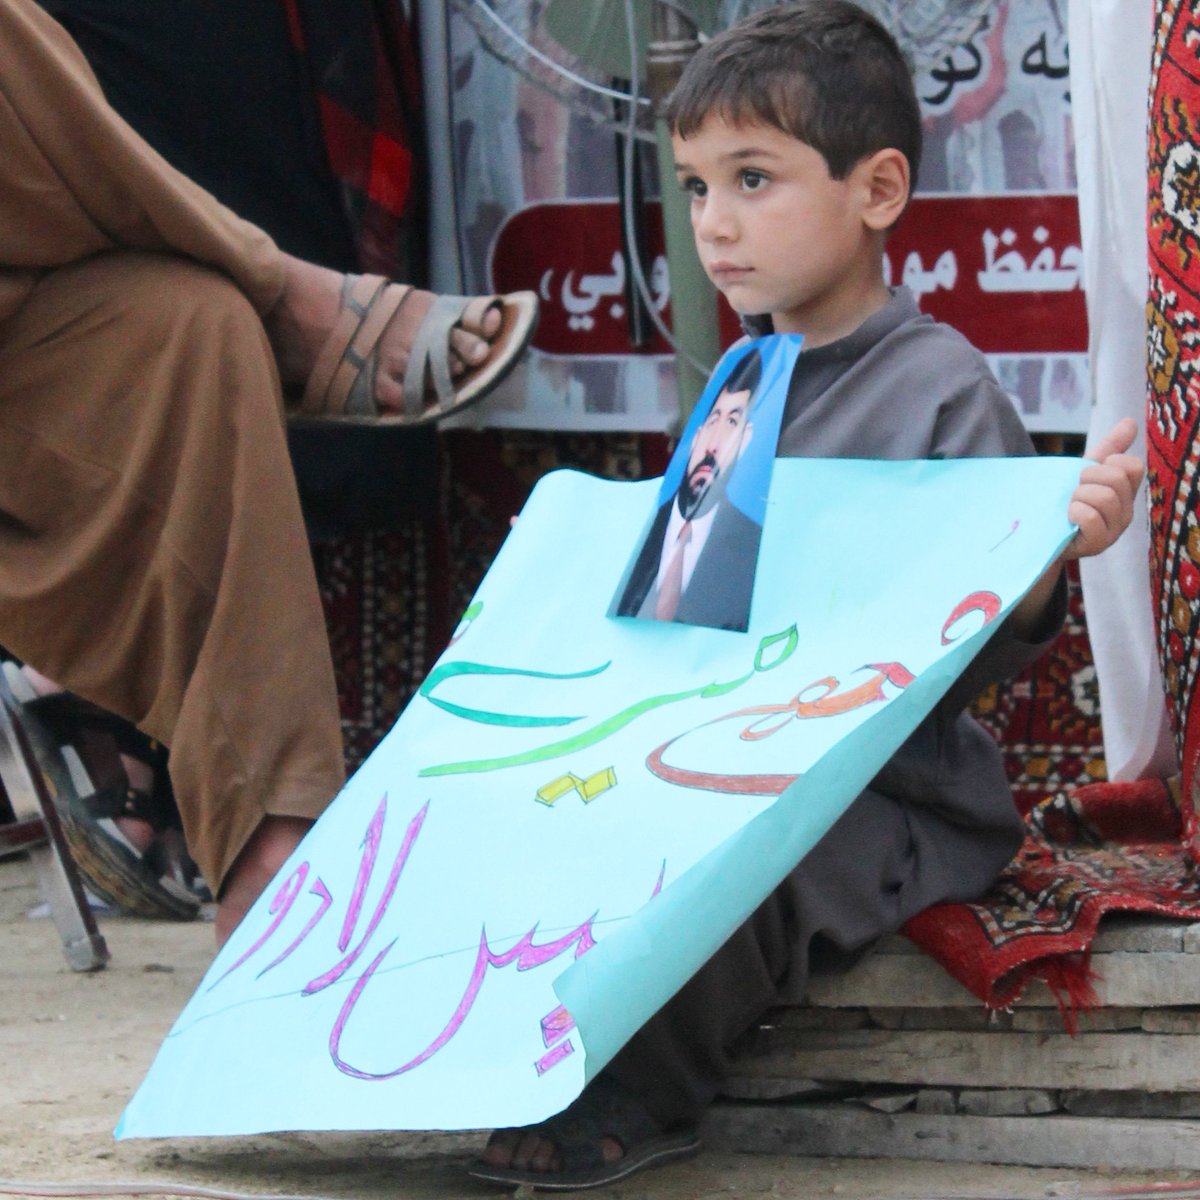 مجھے میرے پاپا واپس لا دو ؟ 
#MissingPersons
#PashtunLongMarch 
@a_baittani @iopyne